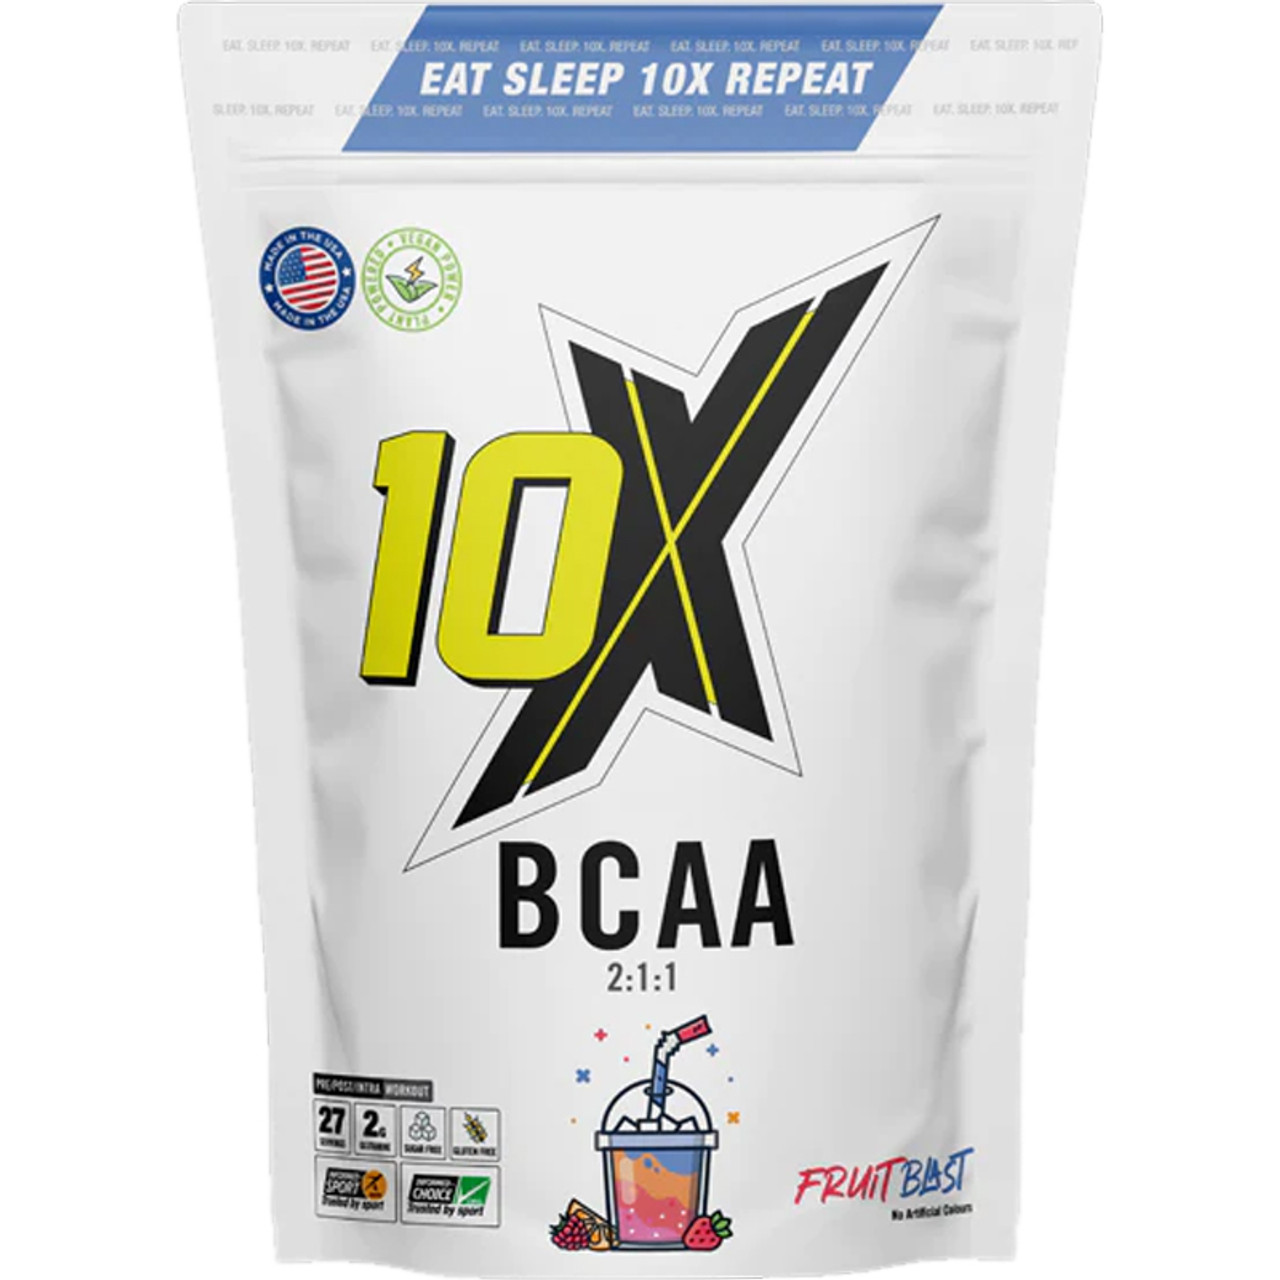 10x Nutrition - BCAA - 243g Fruit Blast